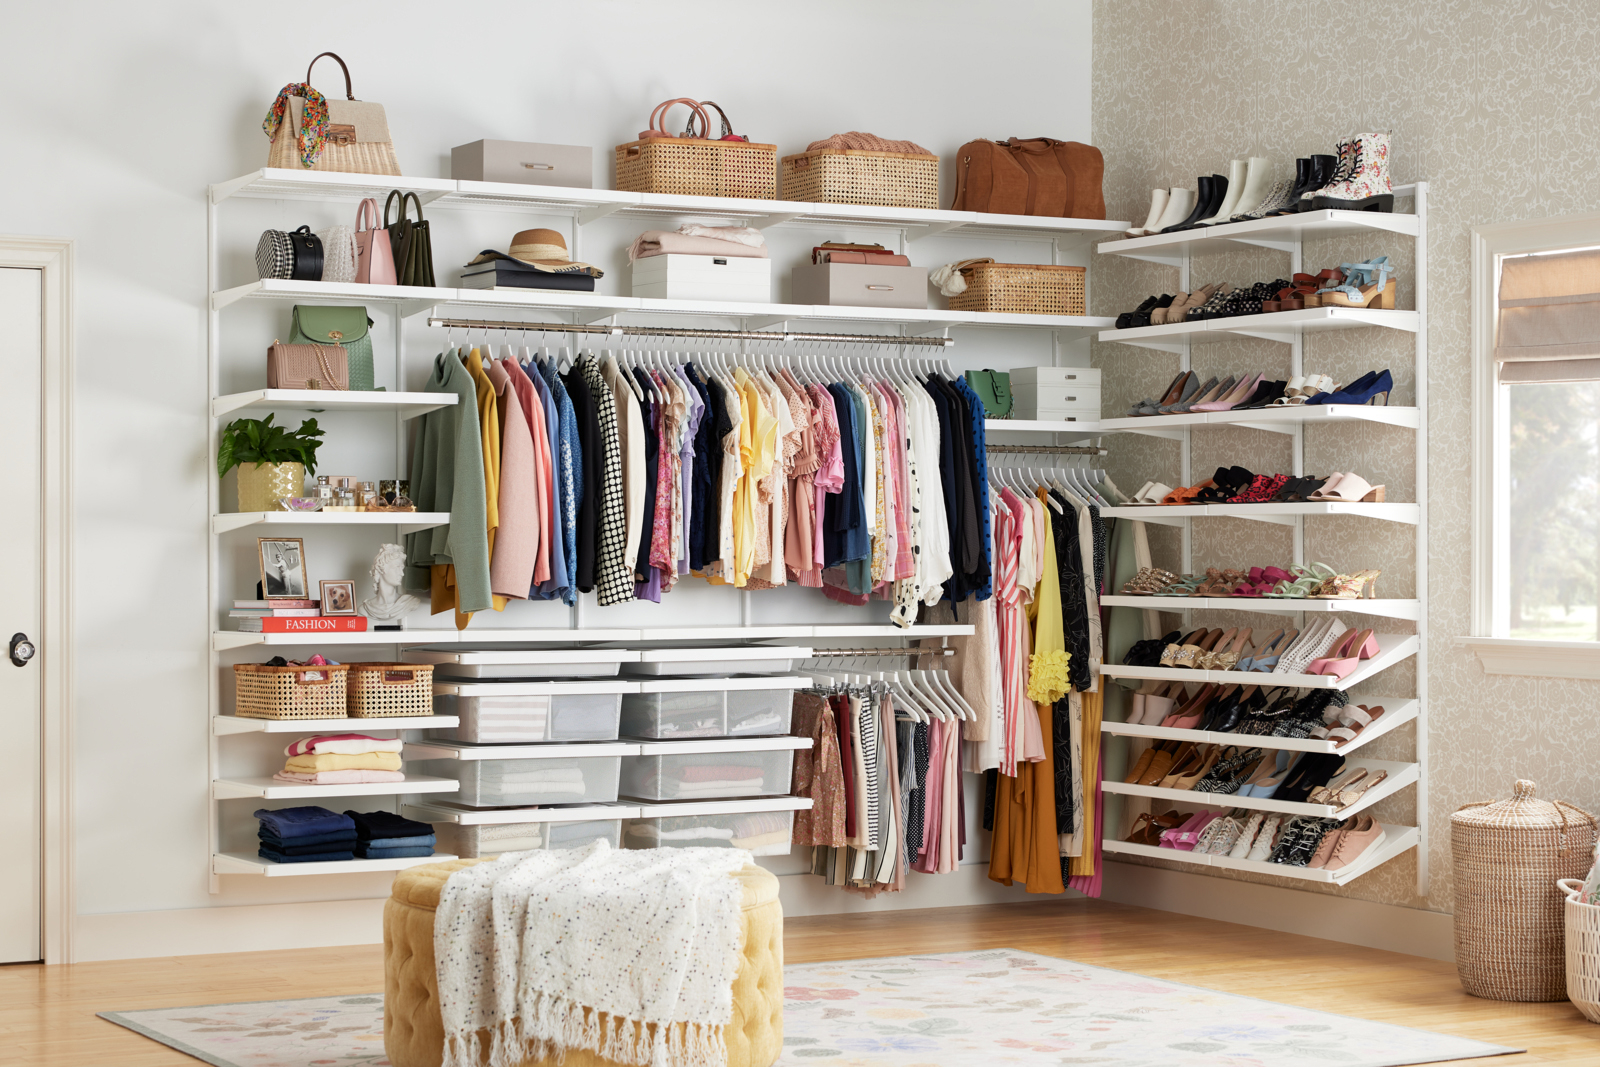 25 Organizing Small Closet ideas 